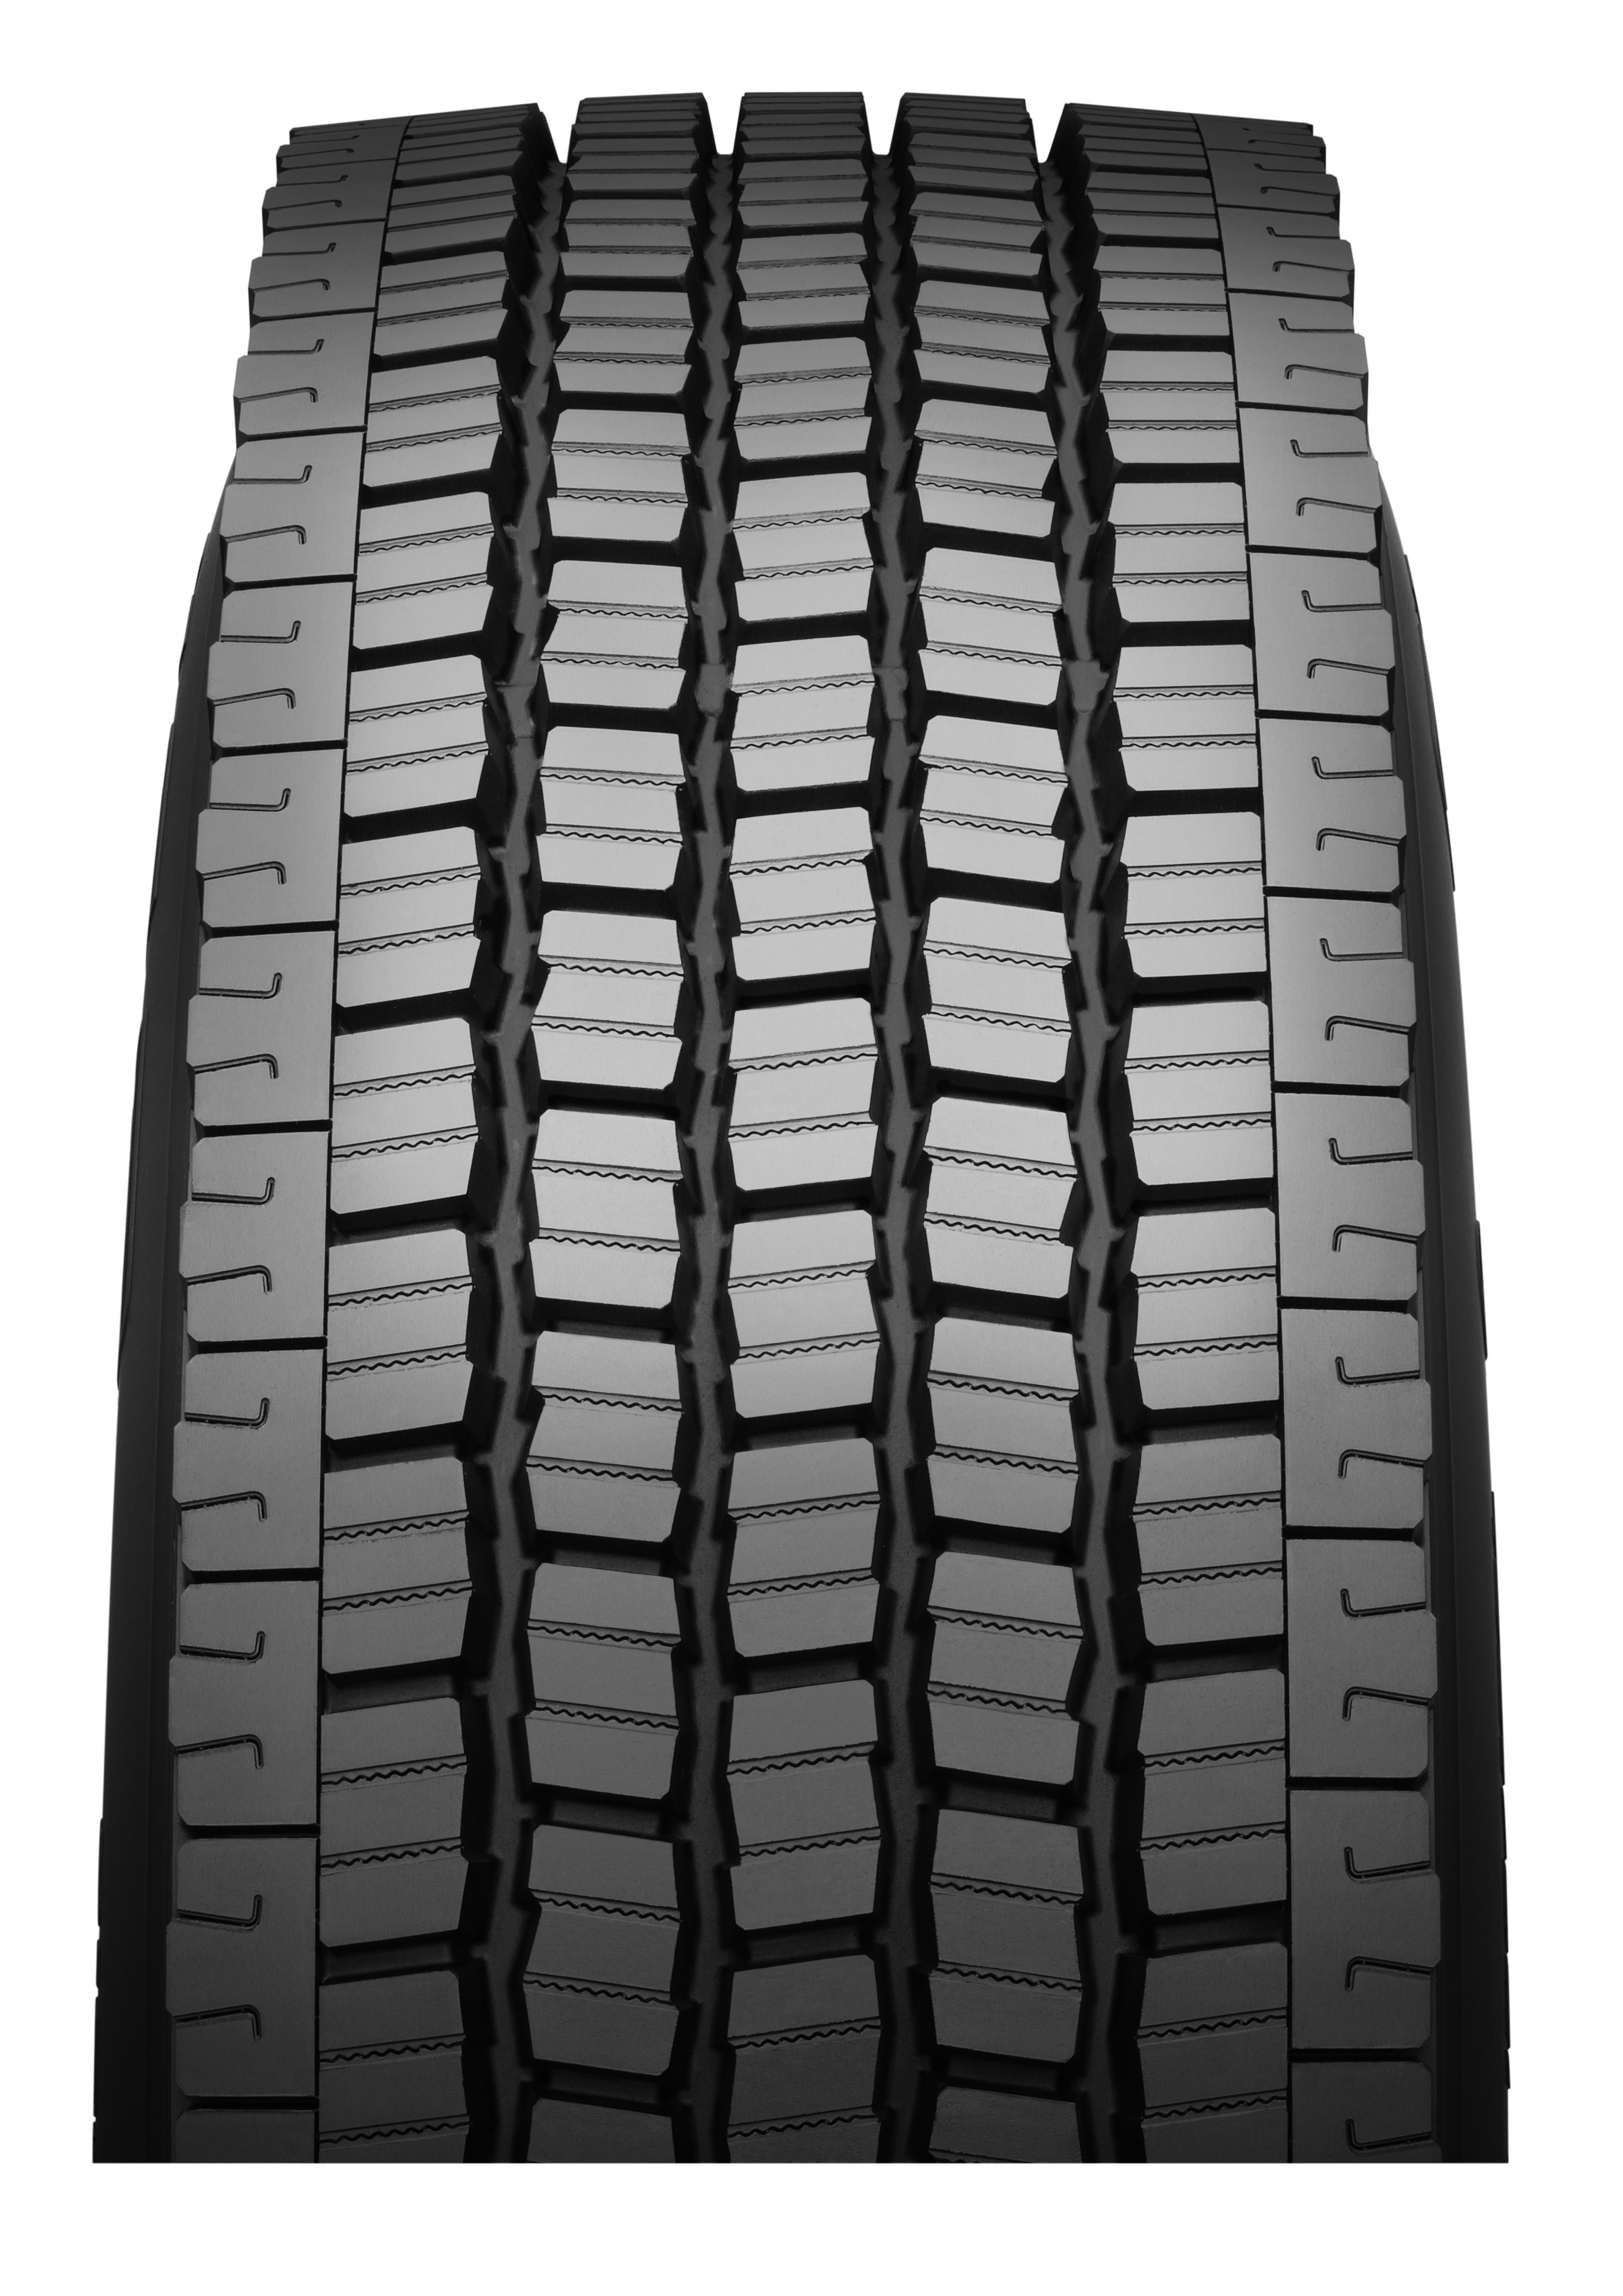 Tyrepress adds Nordic tyre to two Falken - tyres truck winter